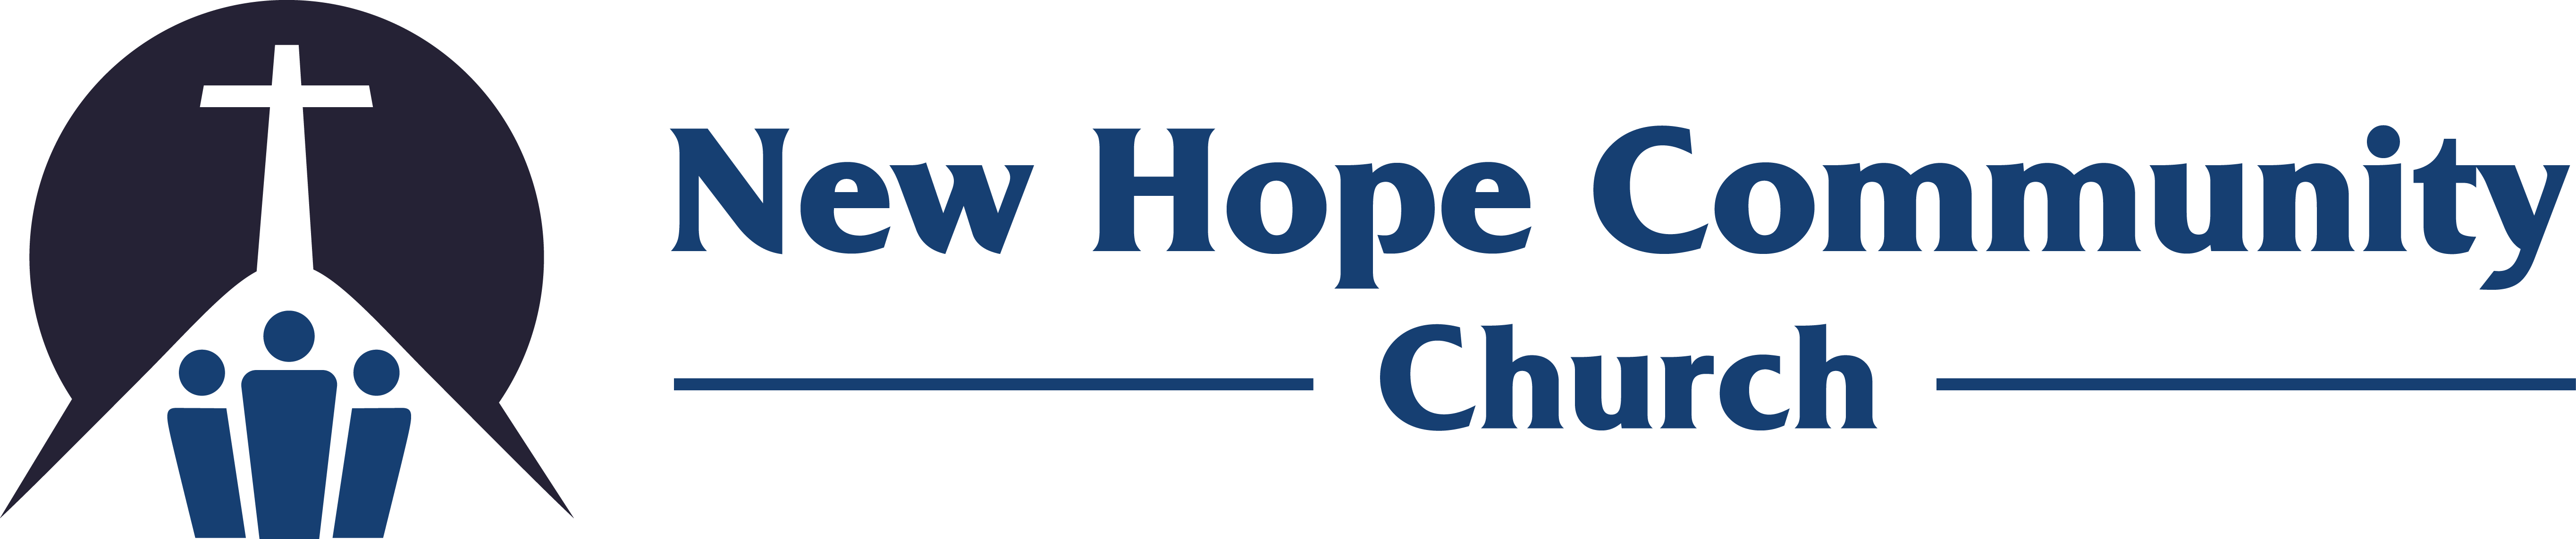 New Hope Community Church Logo Landscape